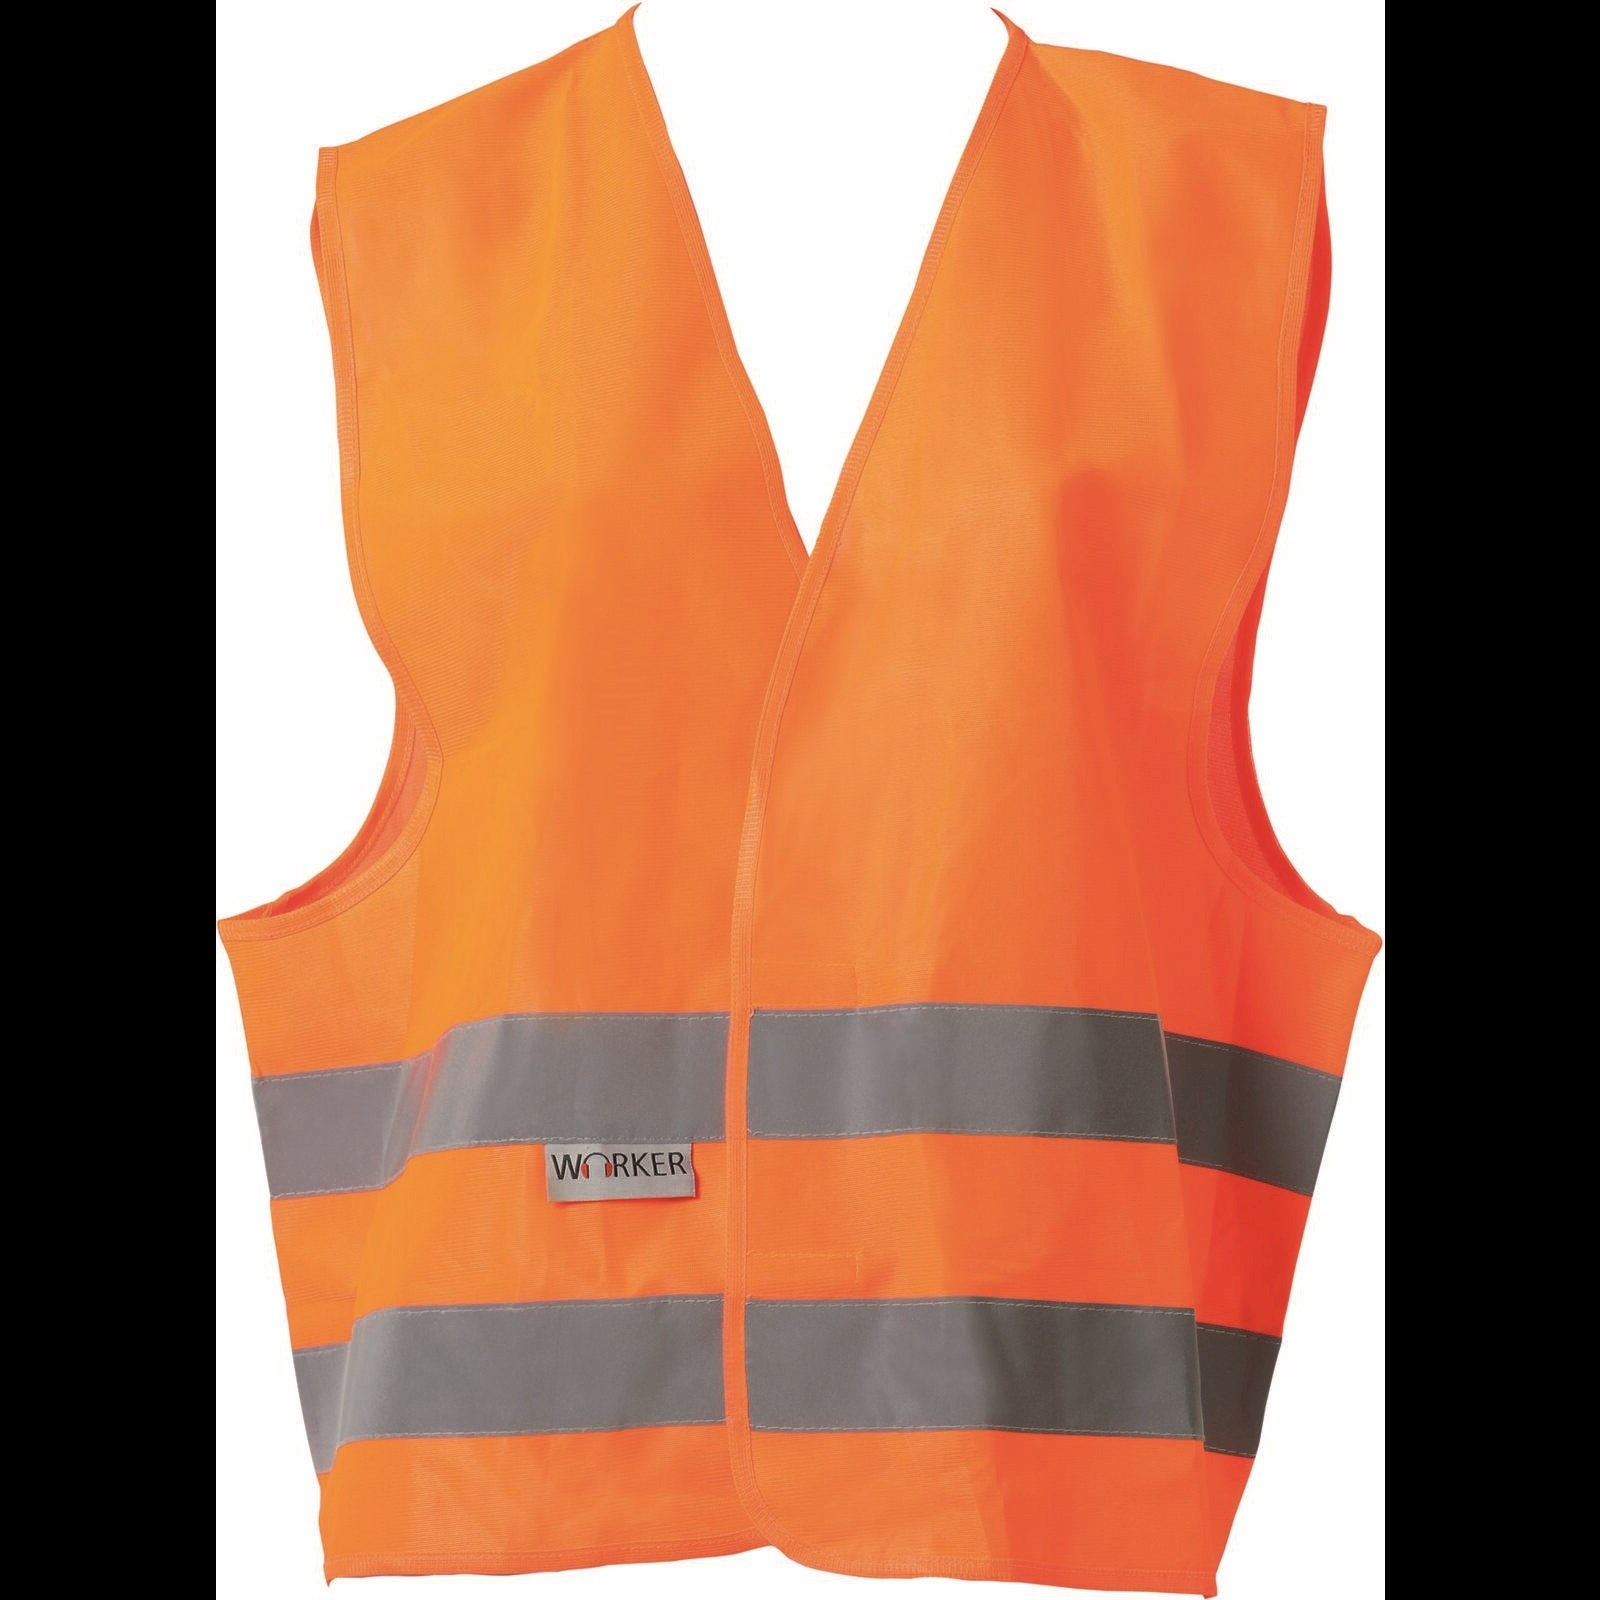 Leuchtweste / Warnweste orange - Metal Badge